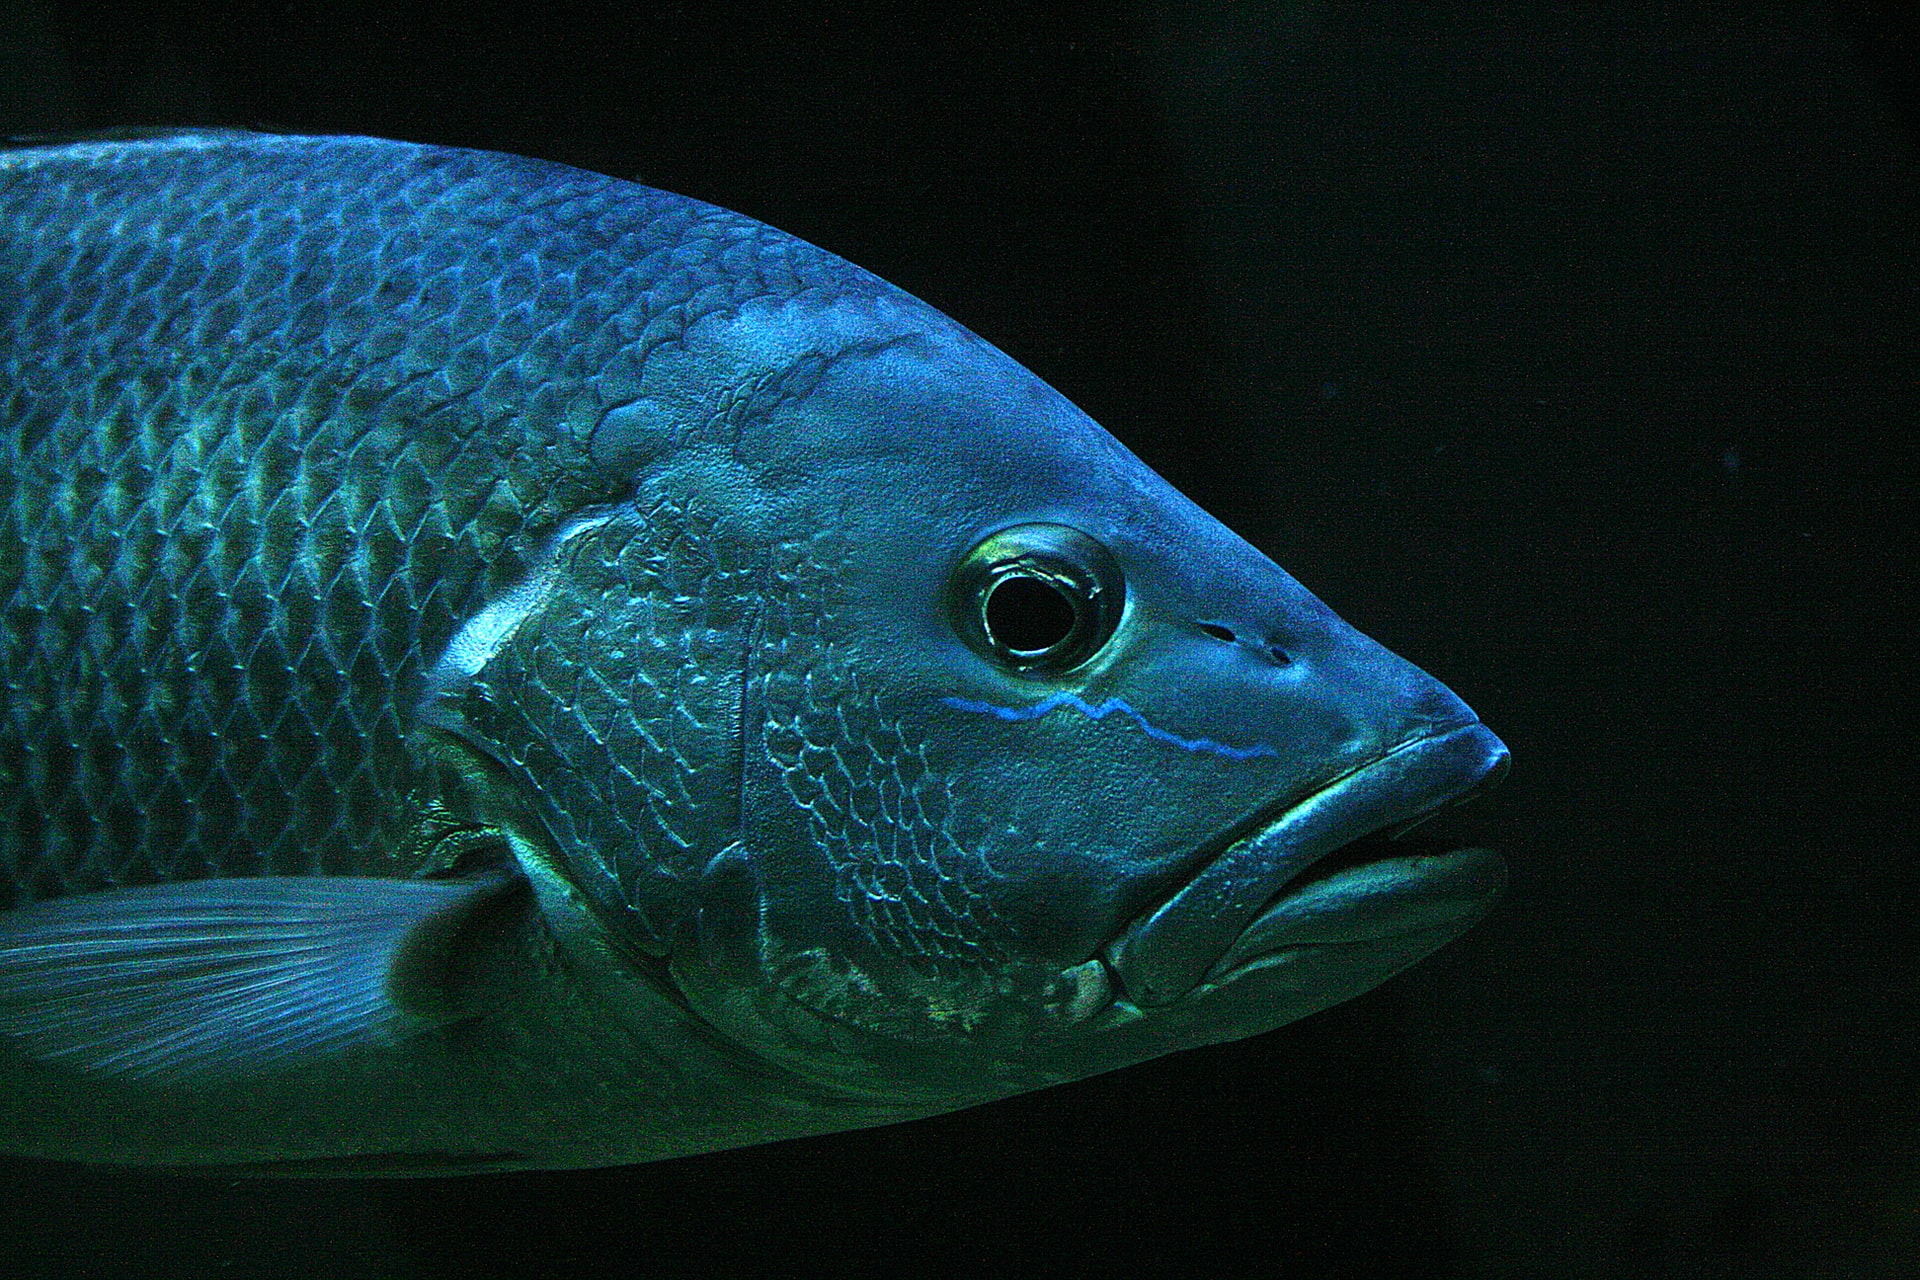 Tilapia fish in water